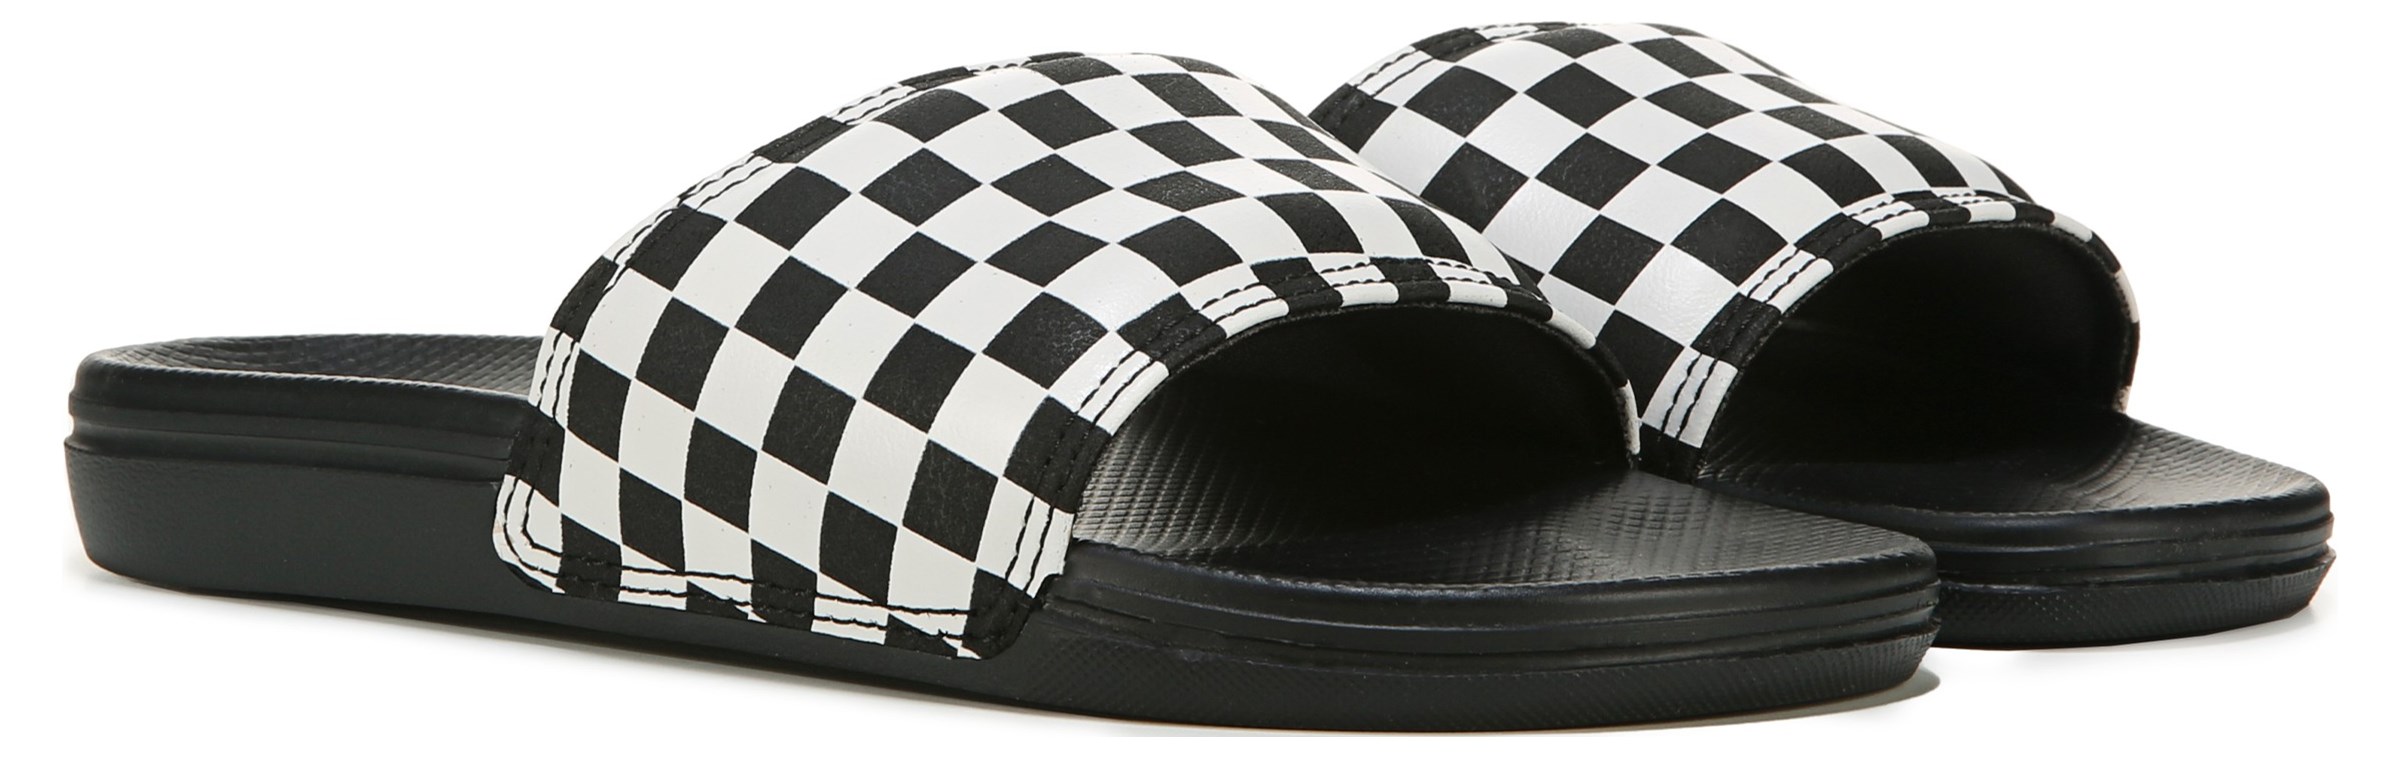 NEW Boys Flip Flops Sport Sandals Size 12-13 Medium Kids Black Slides Shoes 